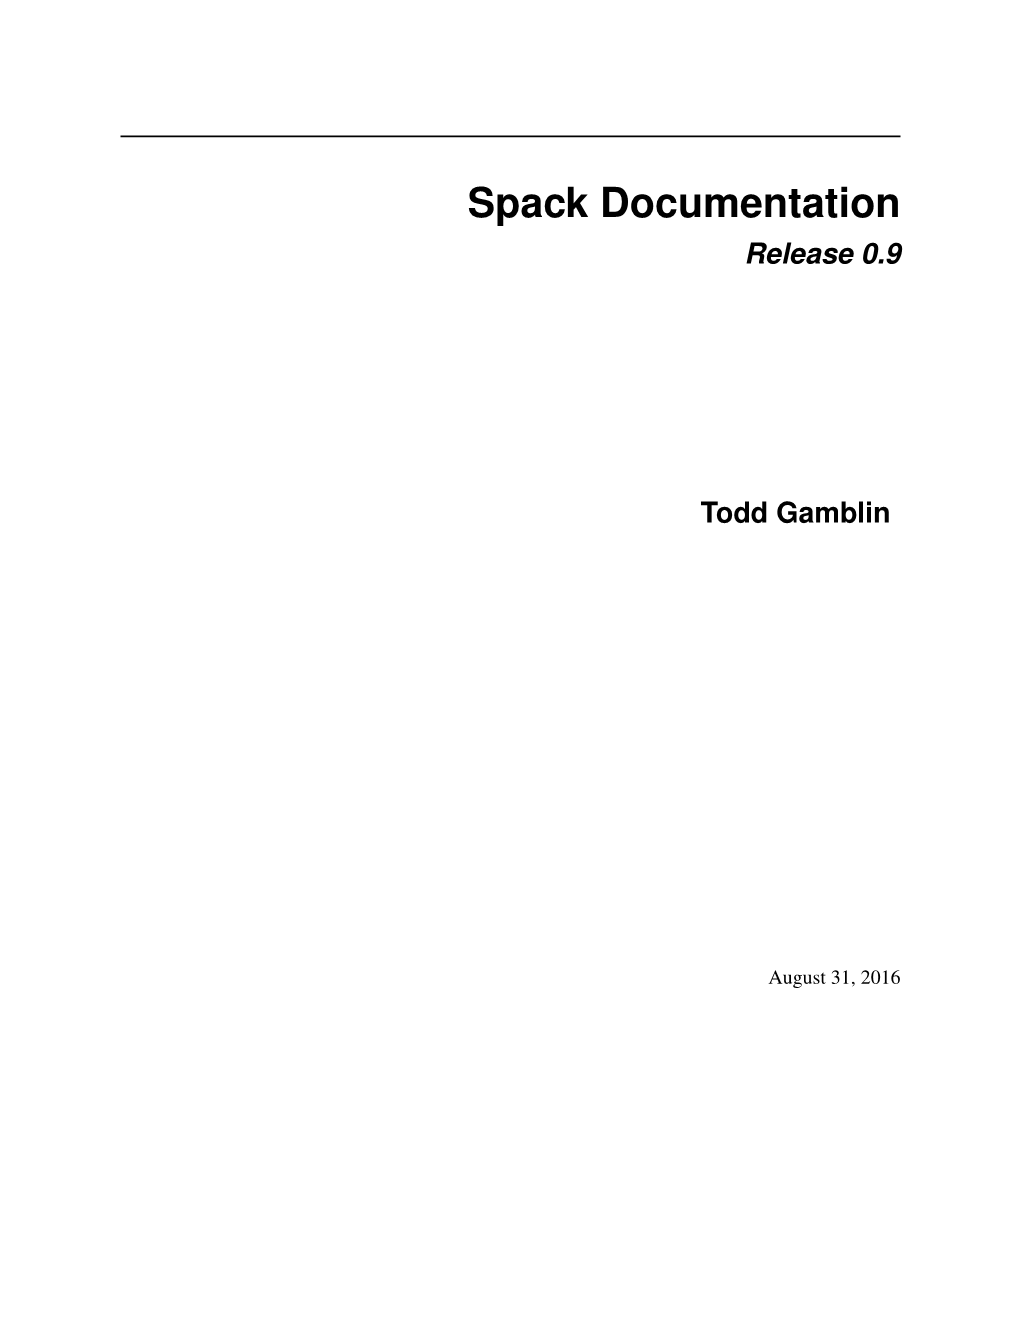 Spack Documentation Release 0.9